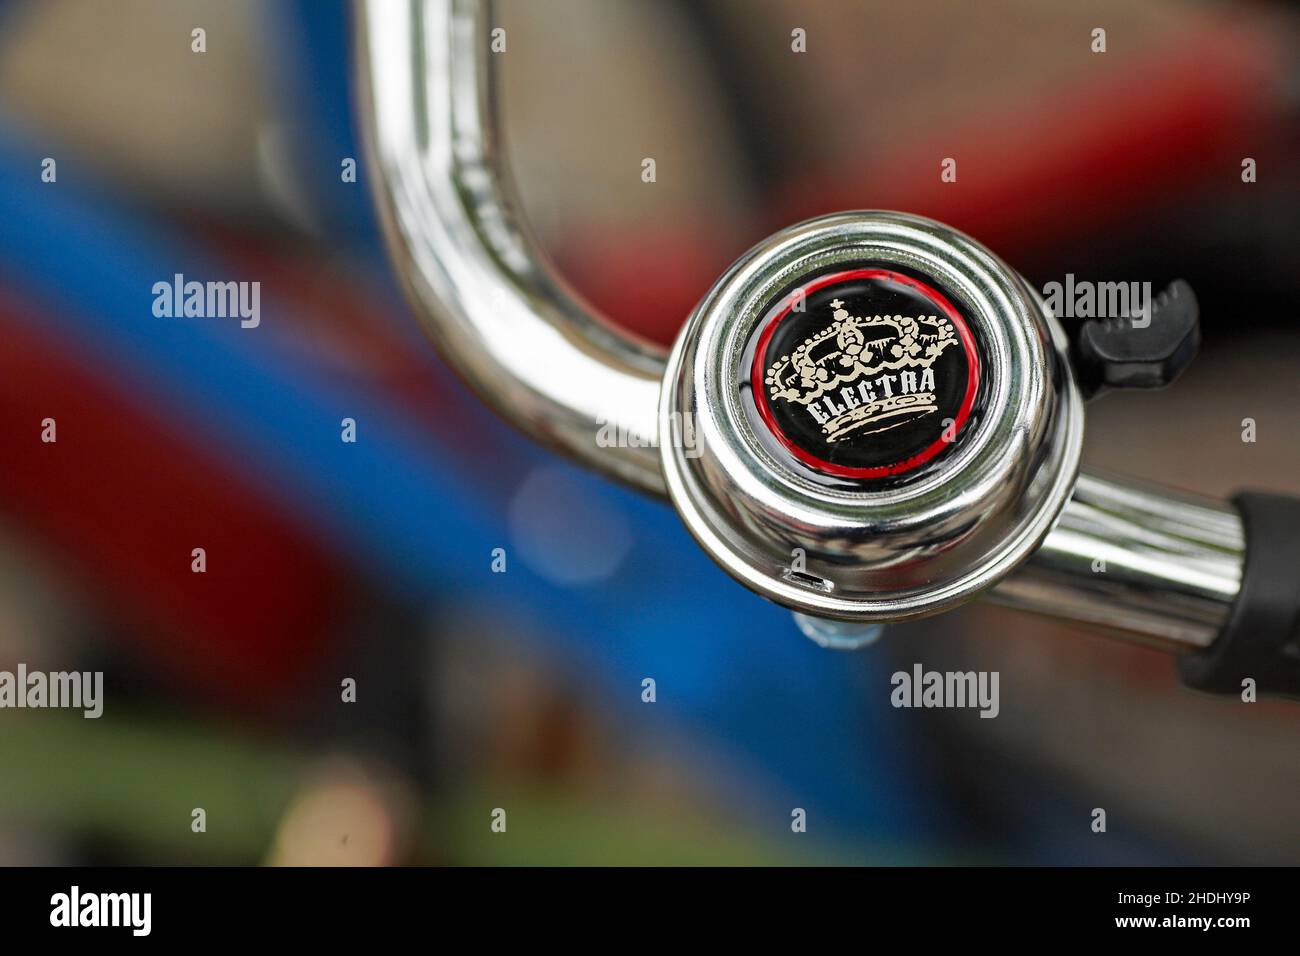 Corona bicicleta campana .Retro estilo bicicleta empuñadura con antigua campana de anillo con fondo borroso. Foto de stock